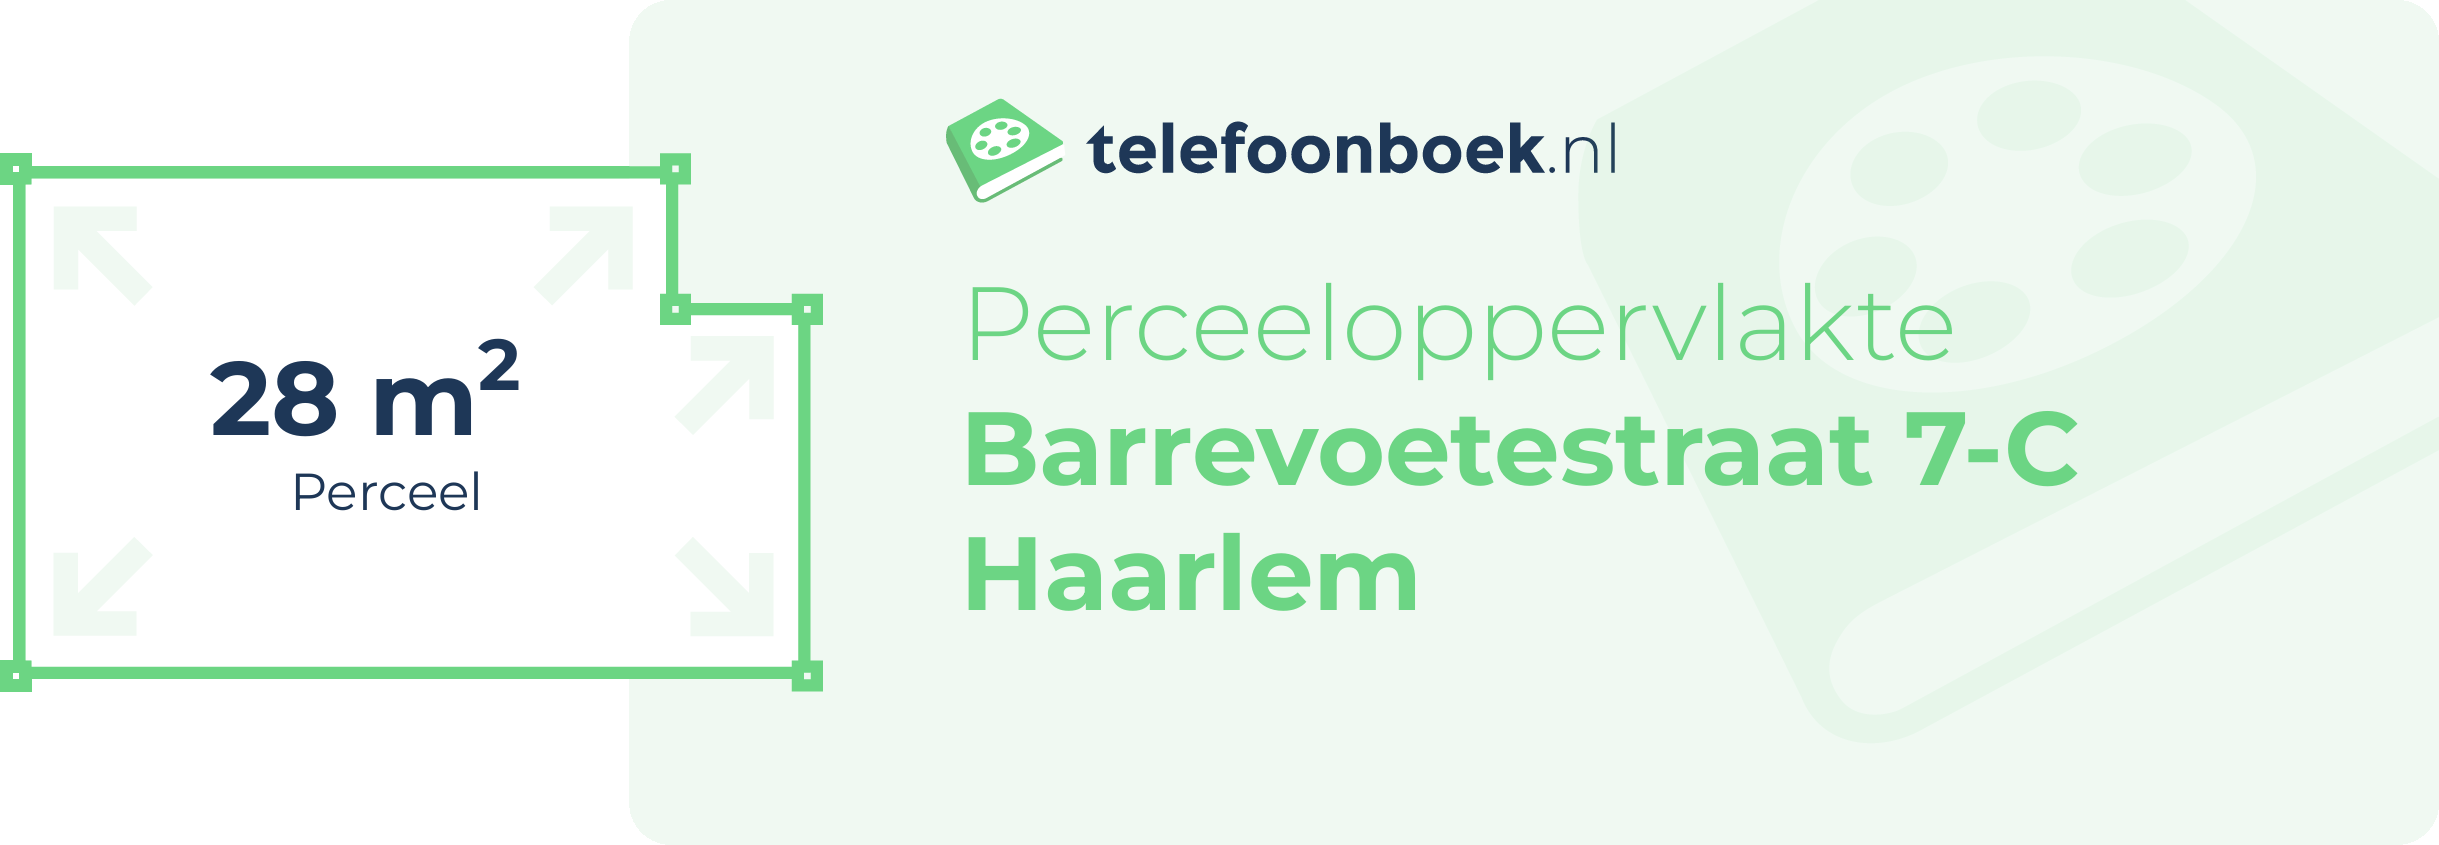 Perceeloppervlakte Barrevoetestraat 7-C Haarlem